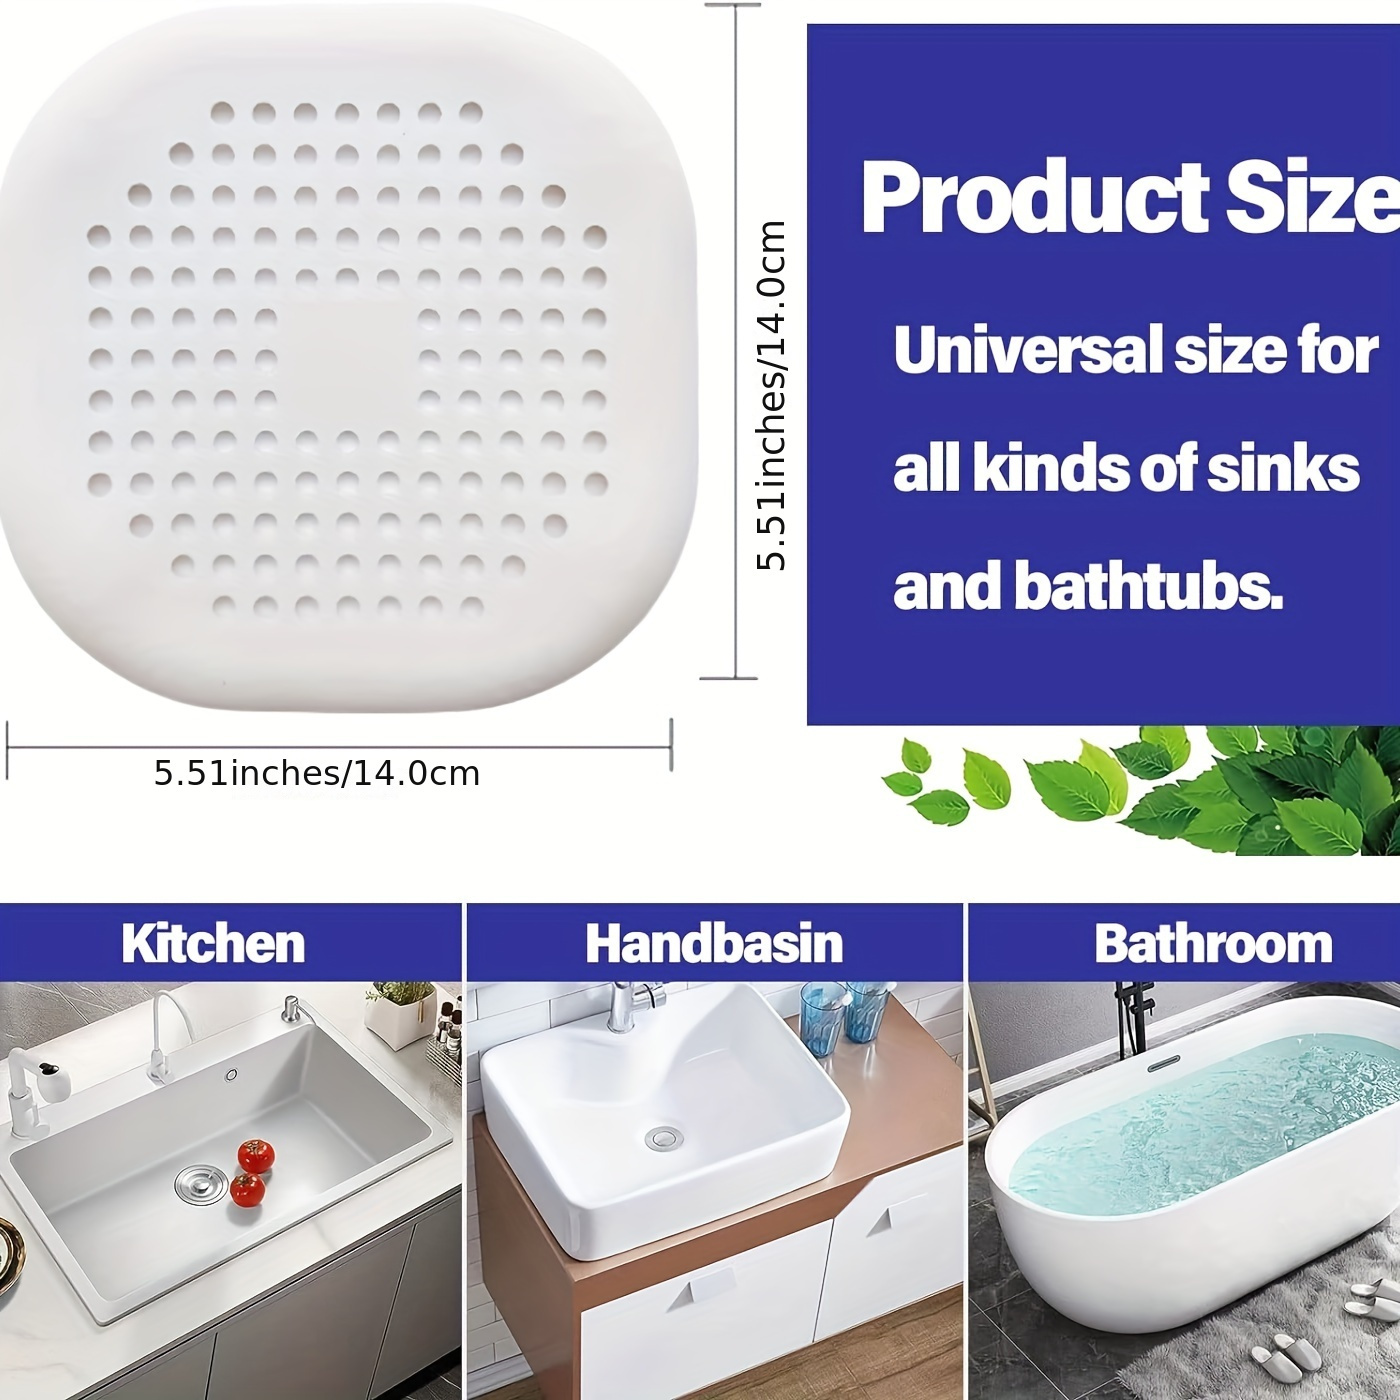 Silicone Shower & Tub Drain Protector